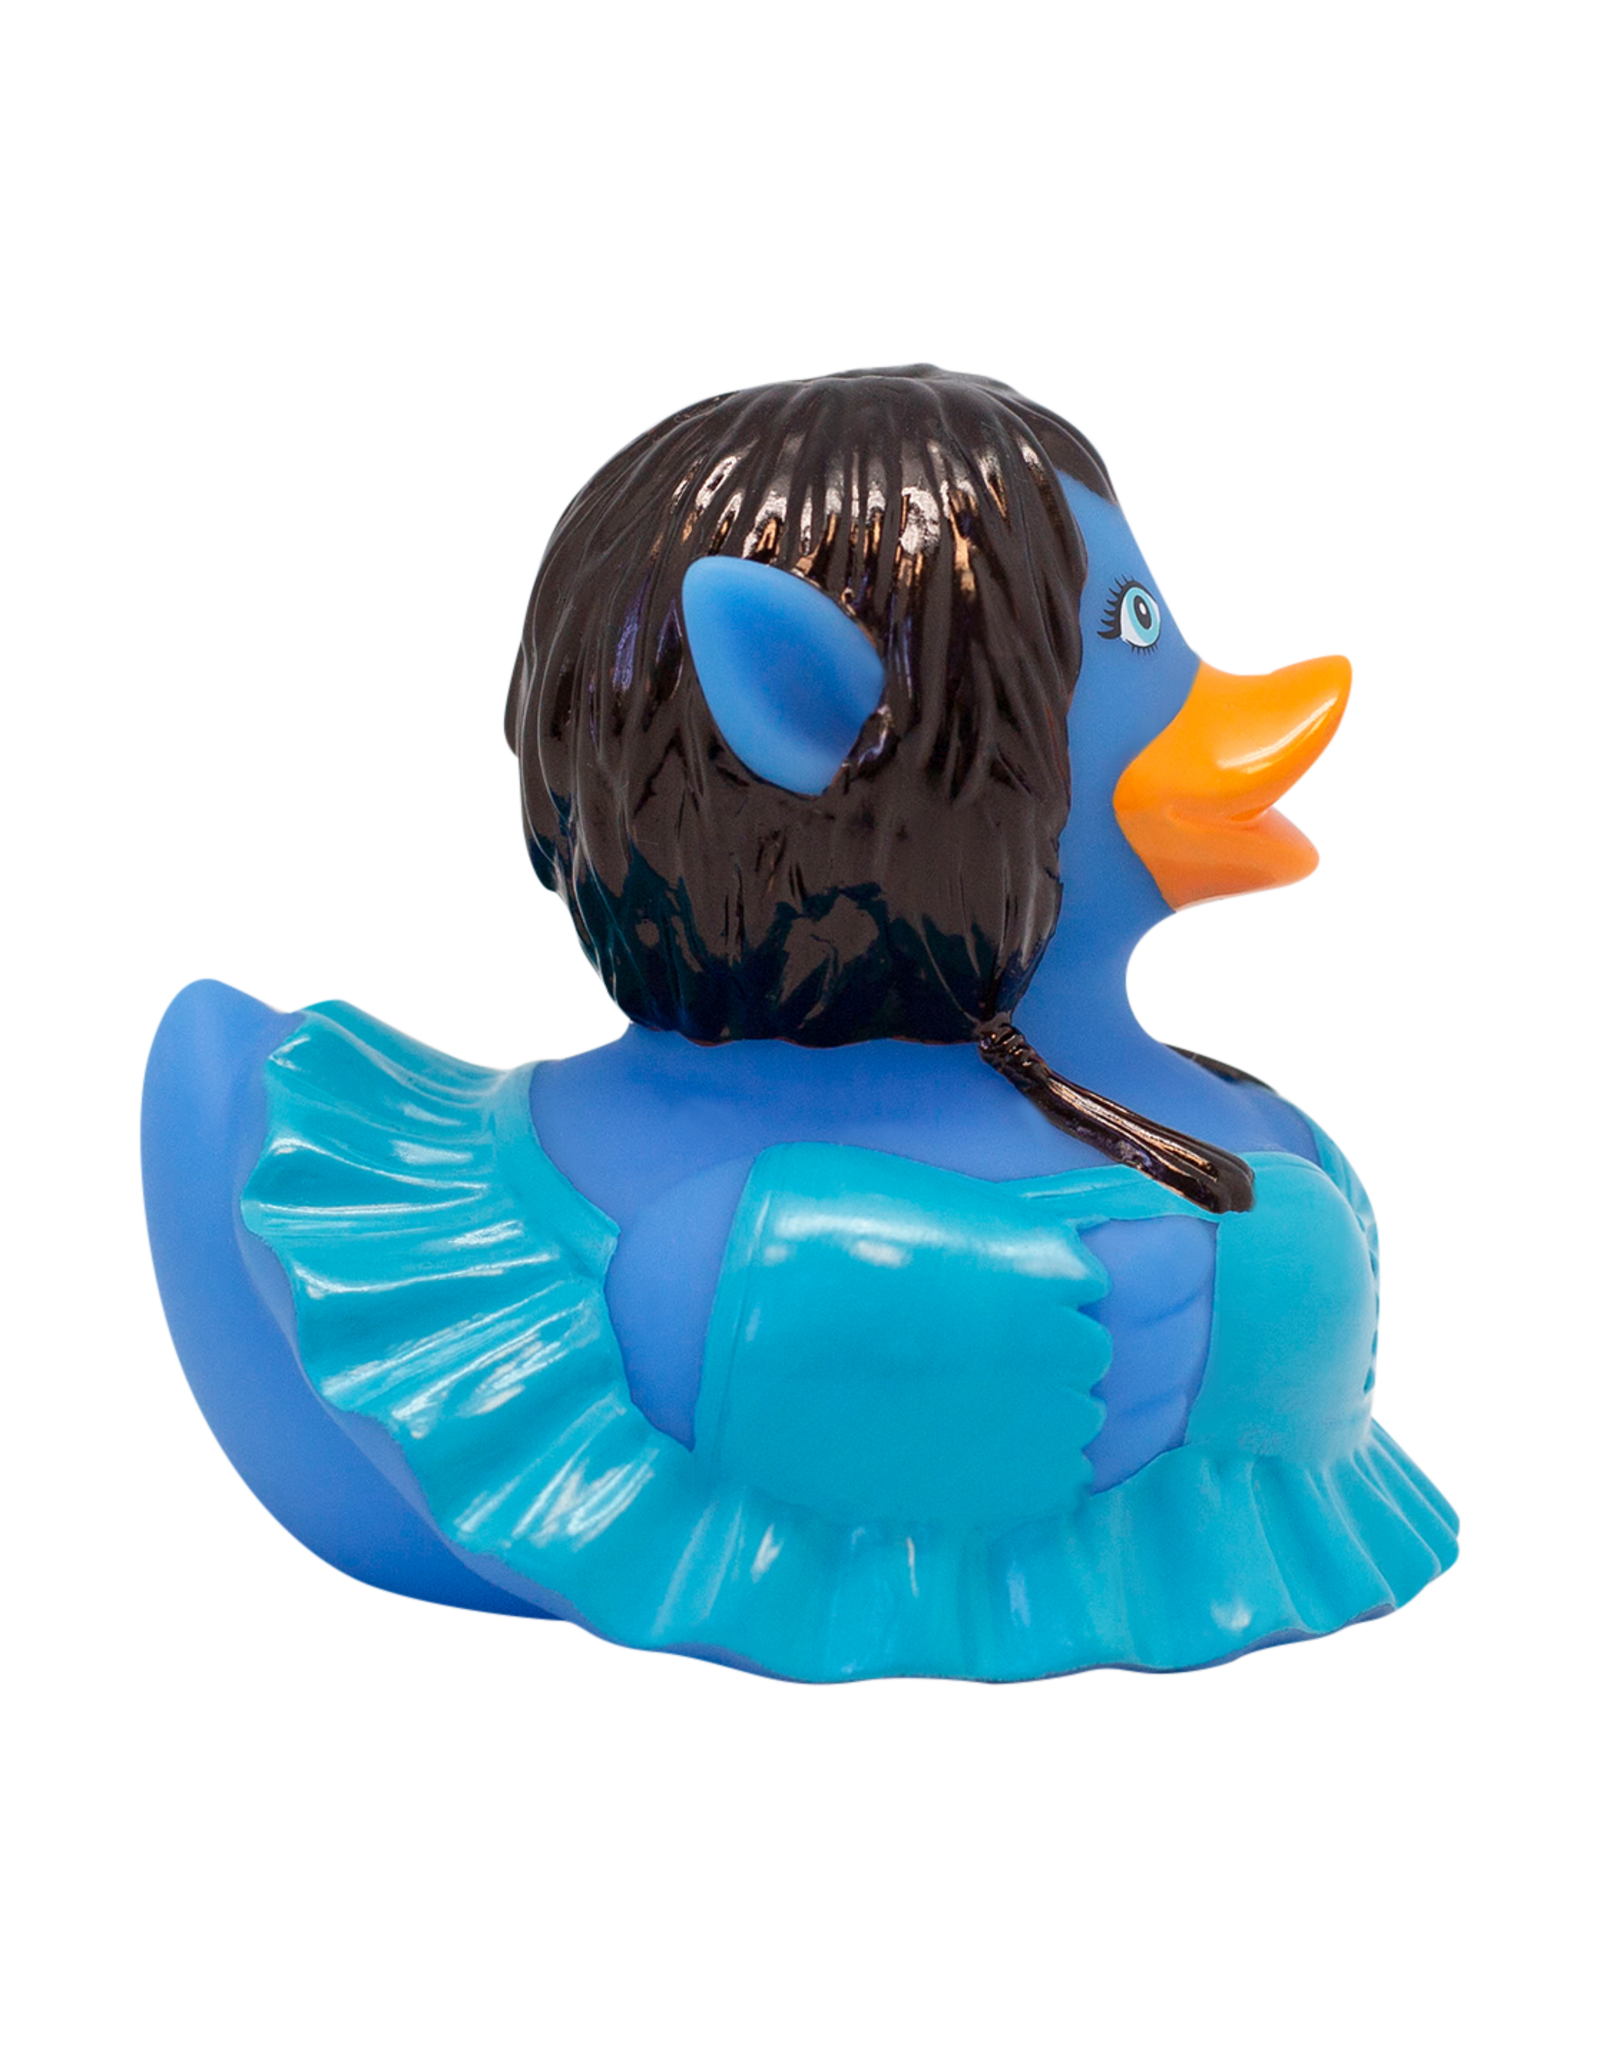 Lilalu Avatara Rubber Duck